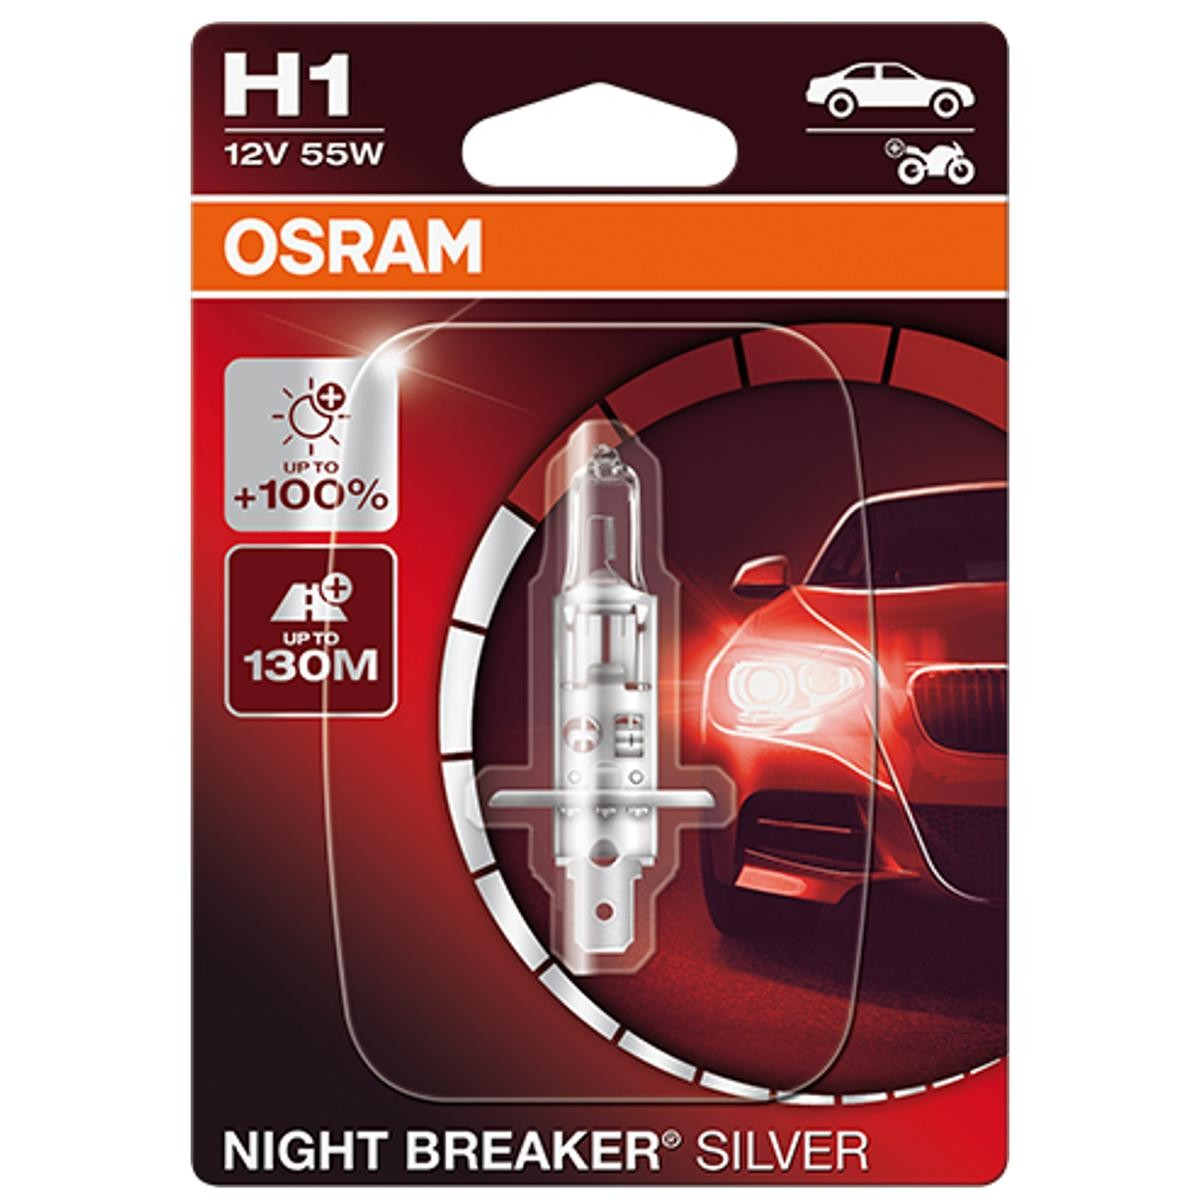 Kit 2 Ampoules Halogène auto Osram NIGHT BREAKER® 200 H4 64193NB200-HCB